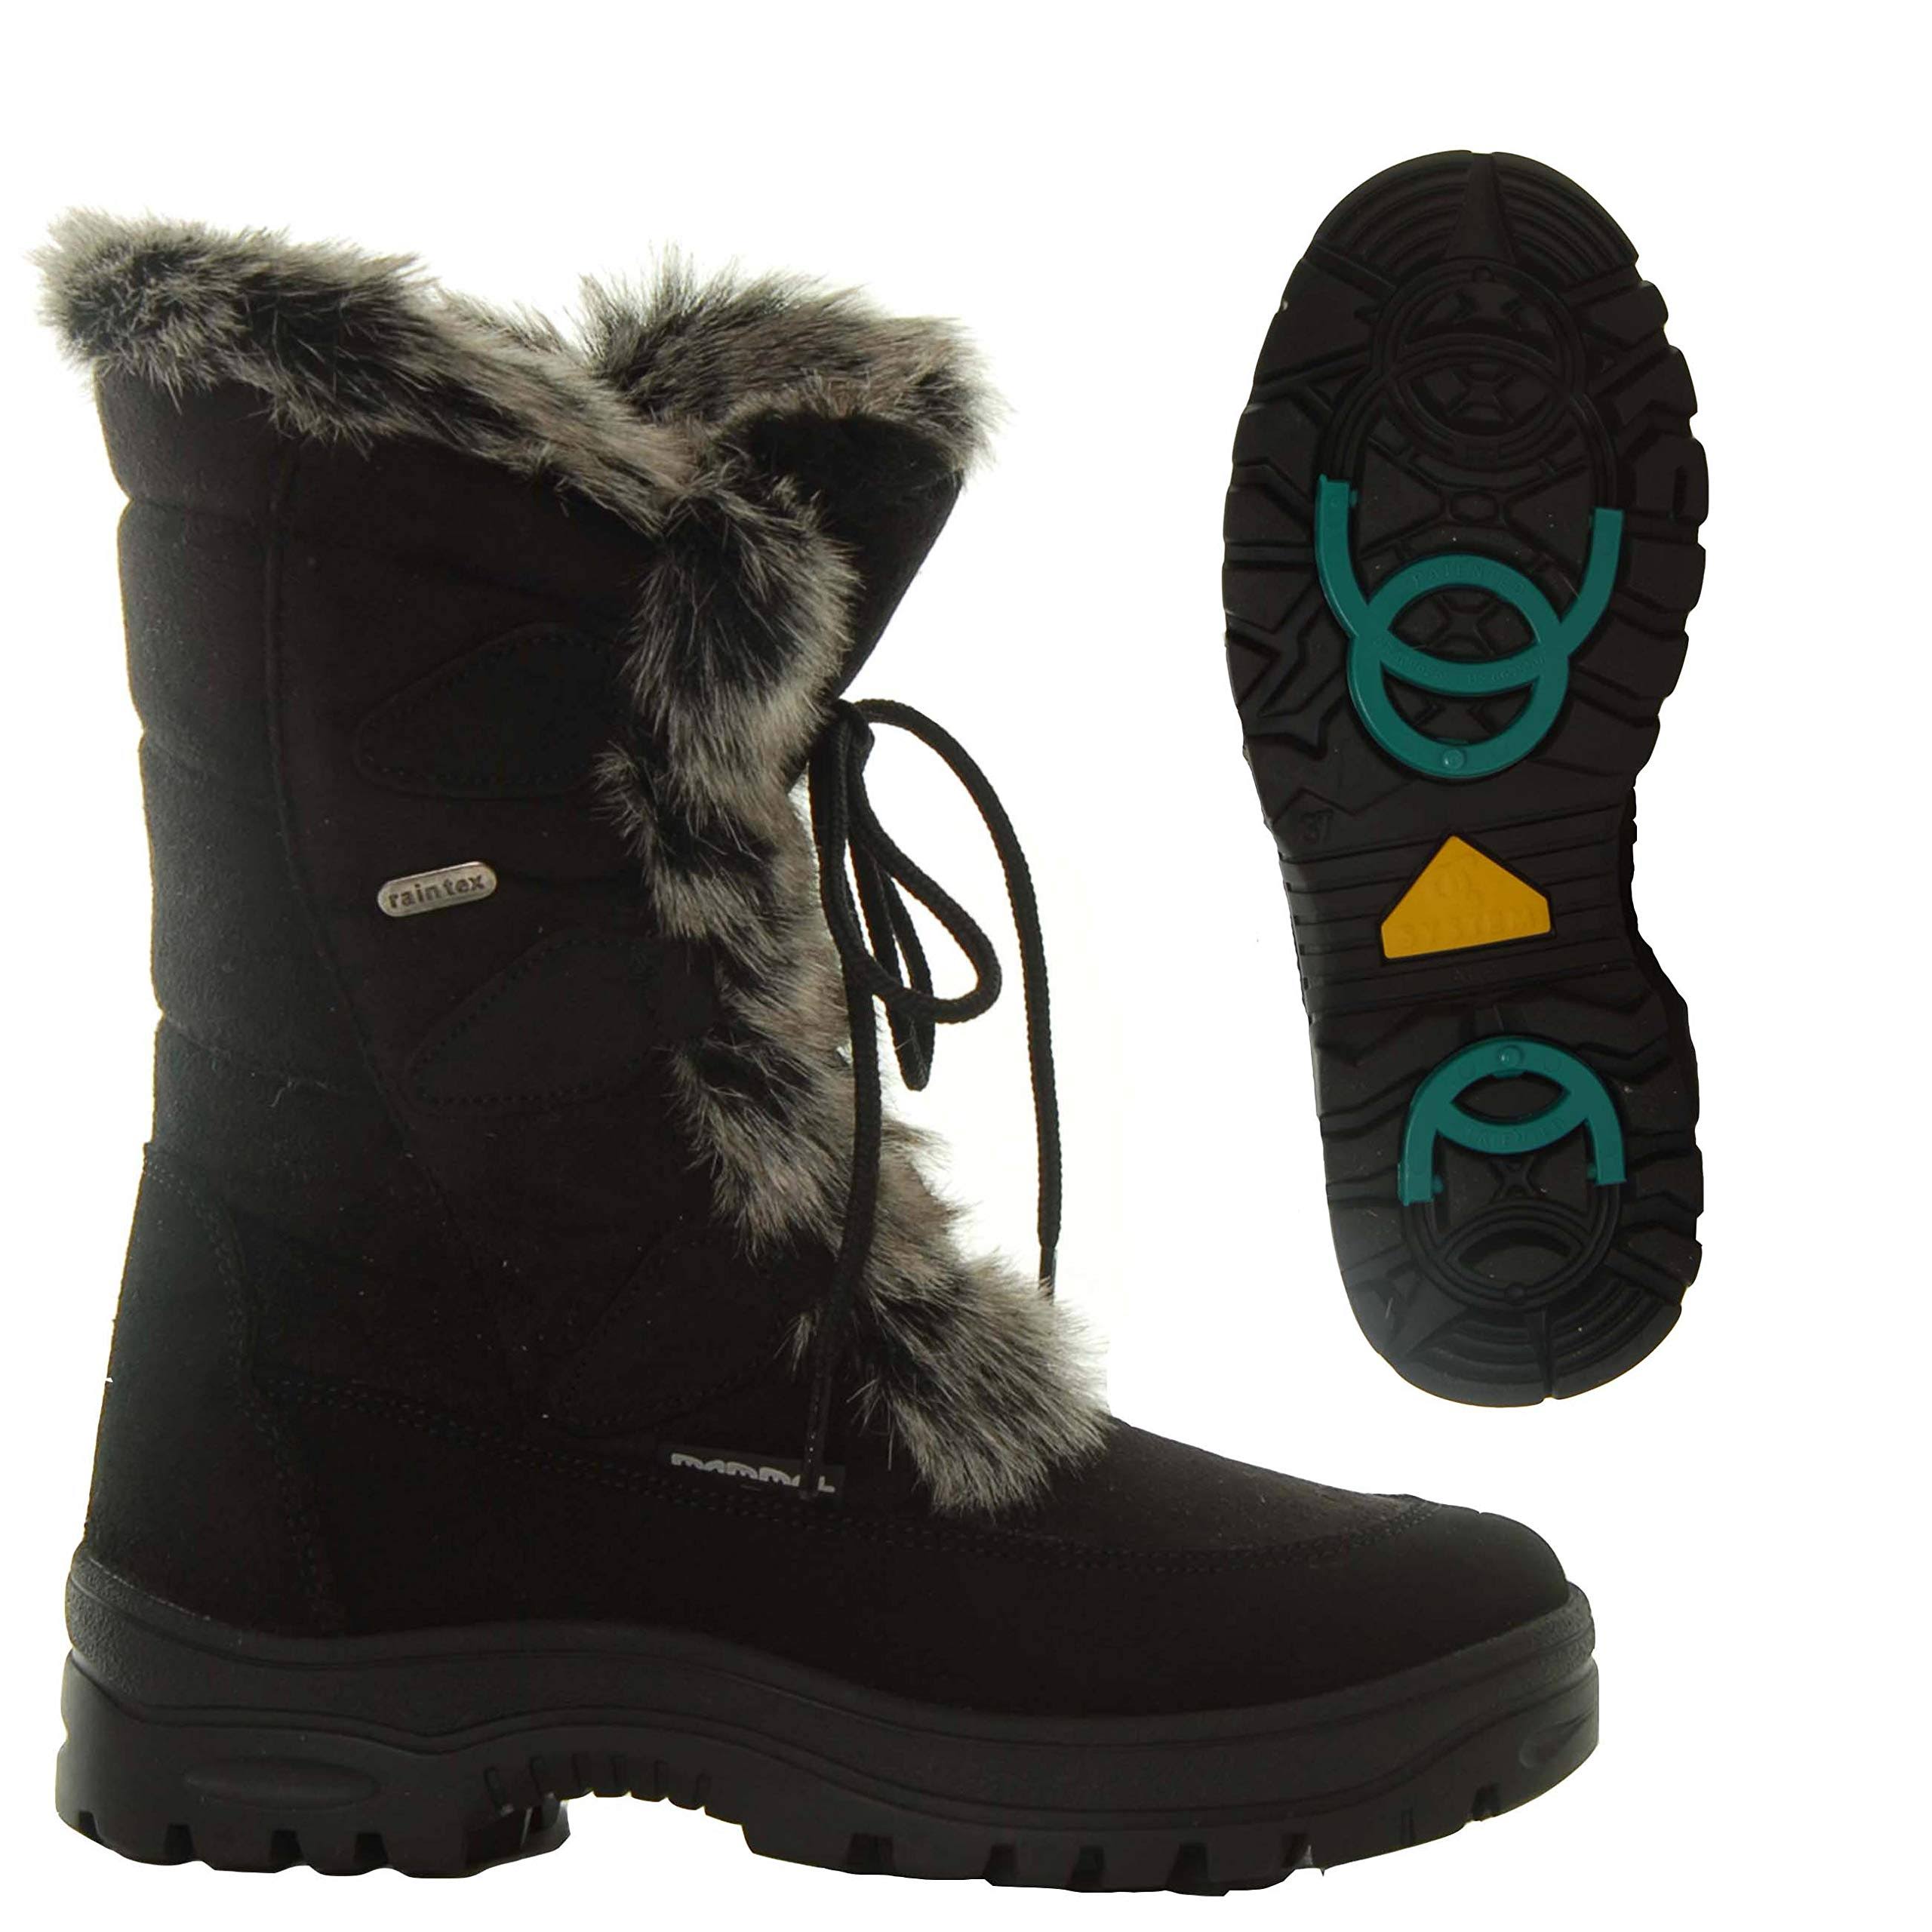 Mammal Oribi Ladies Snow Boots Black